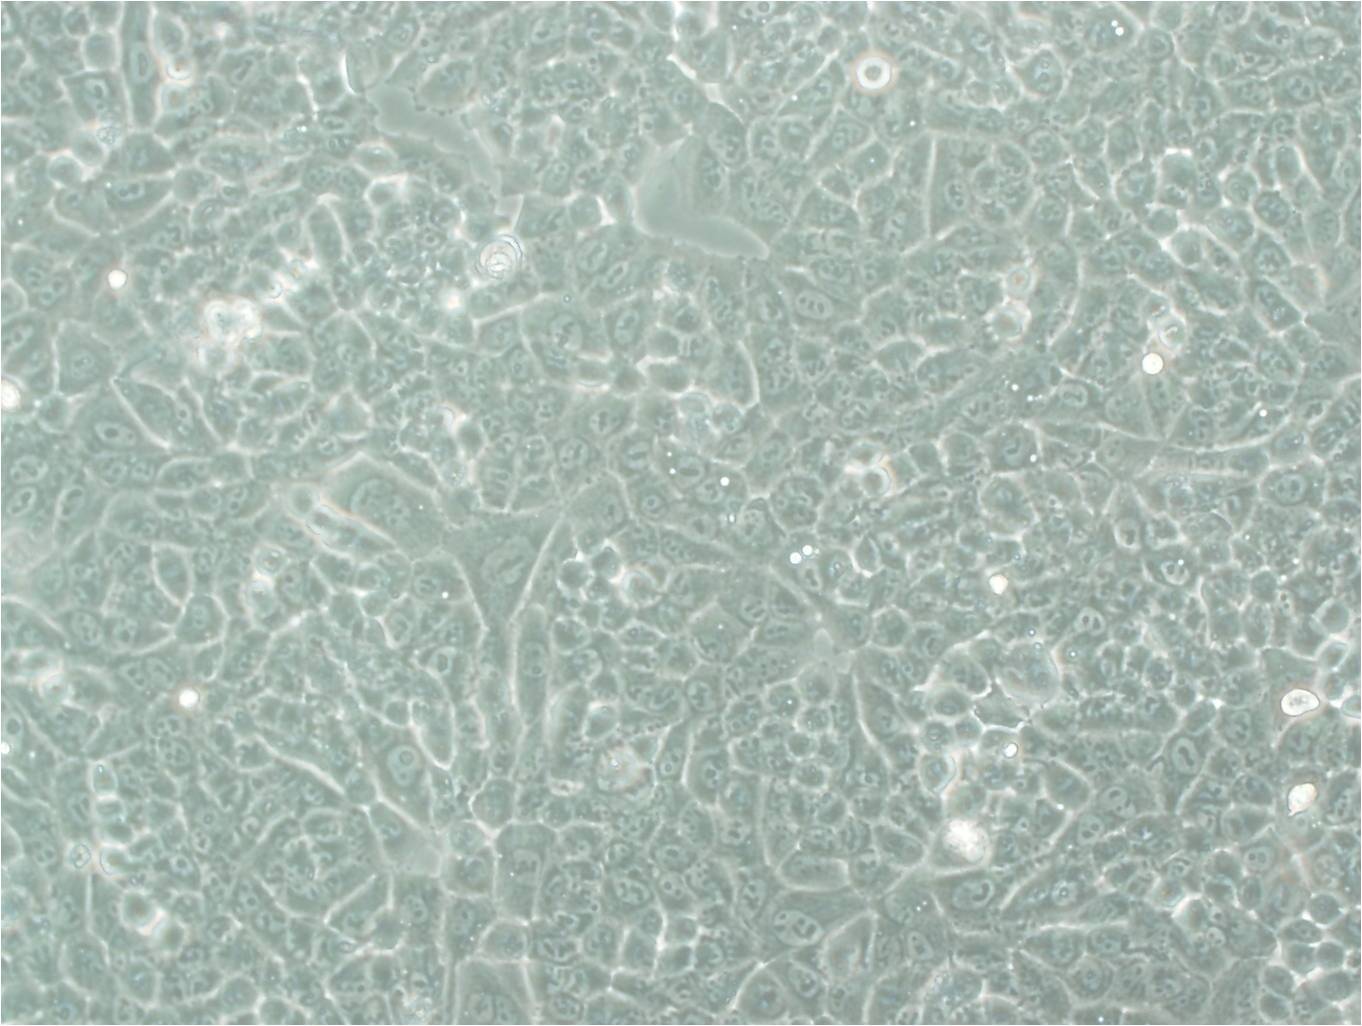 Caov-4 Cells|人卵巢癌克隆细胞